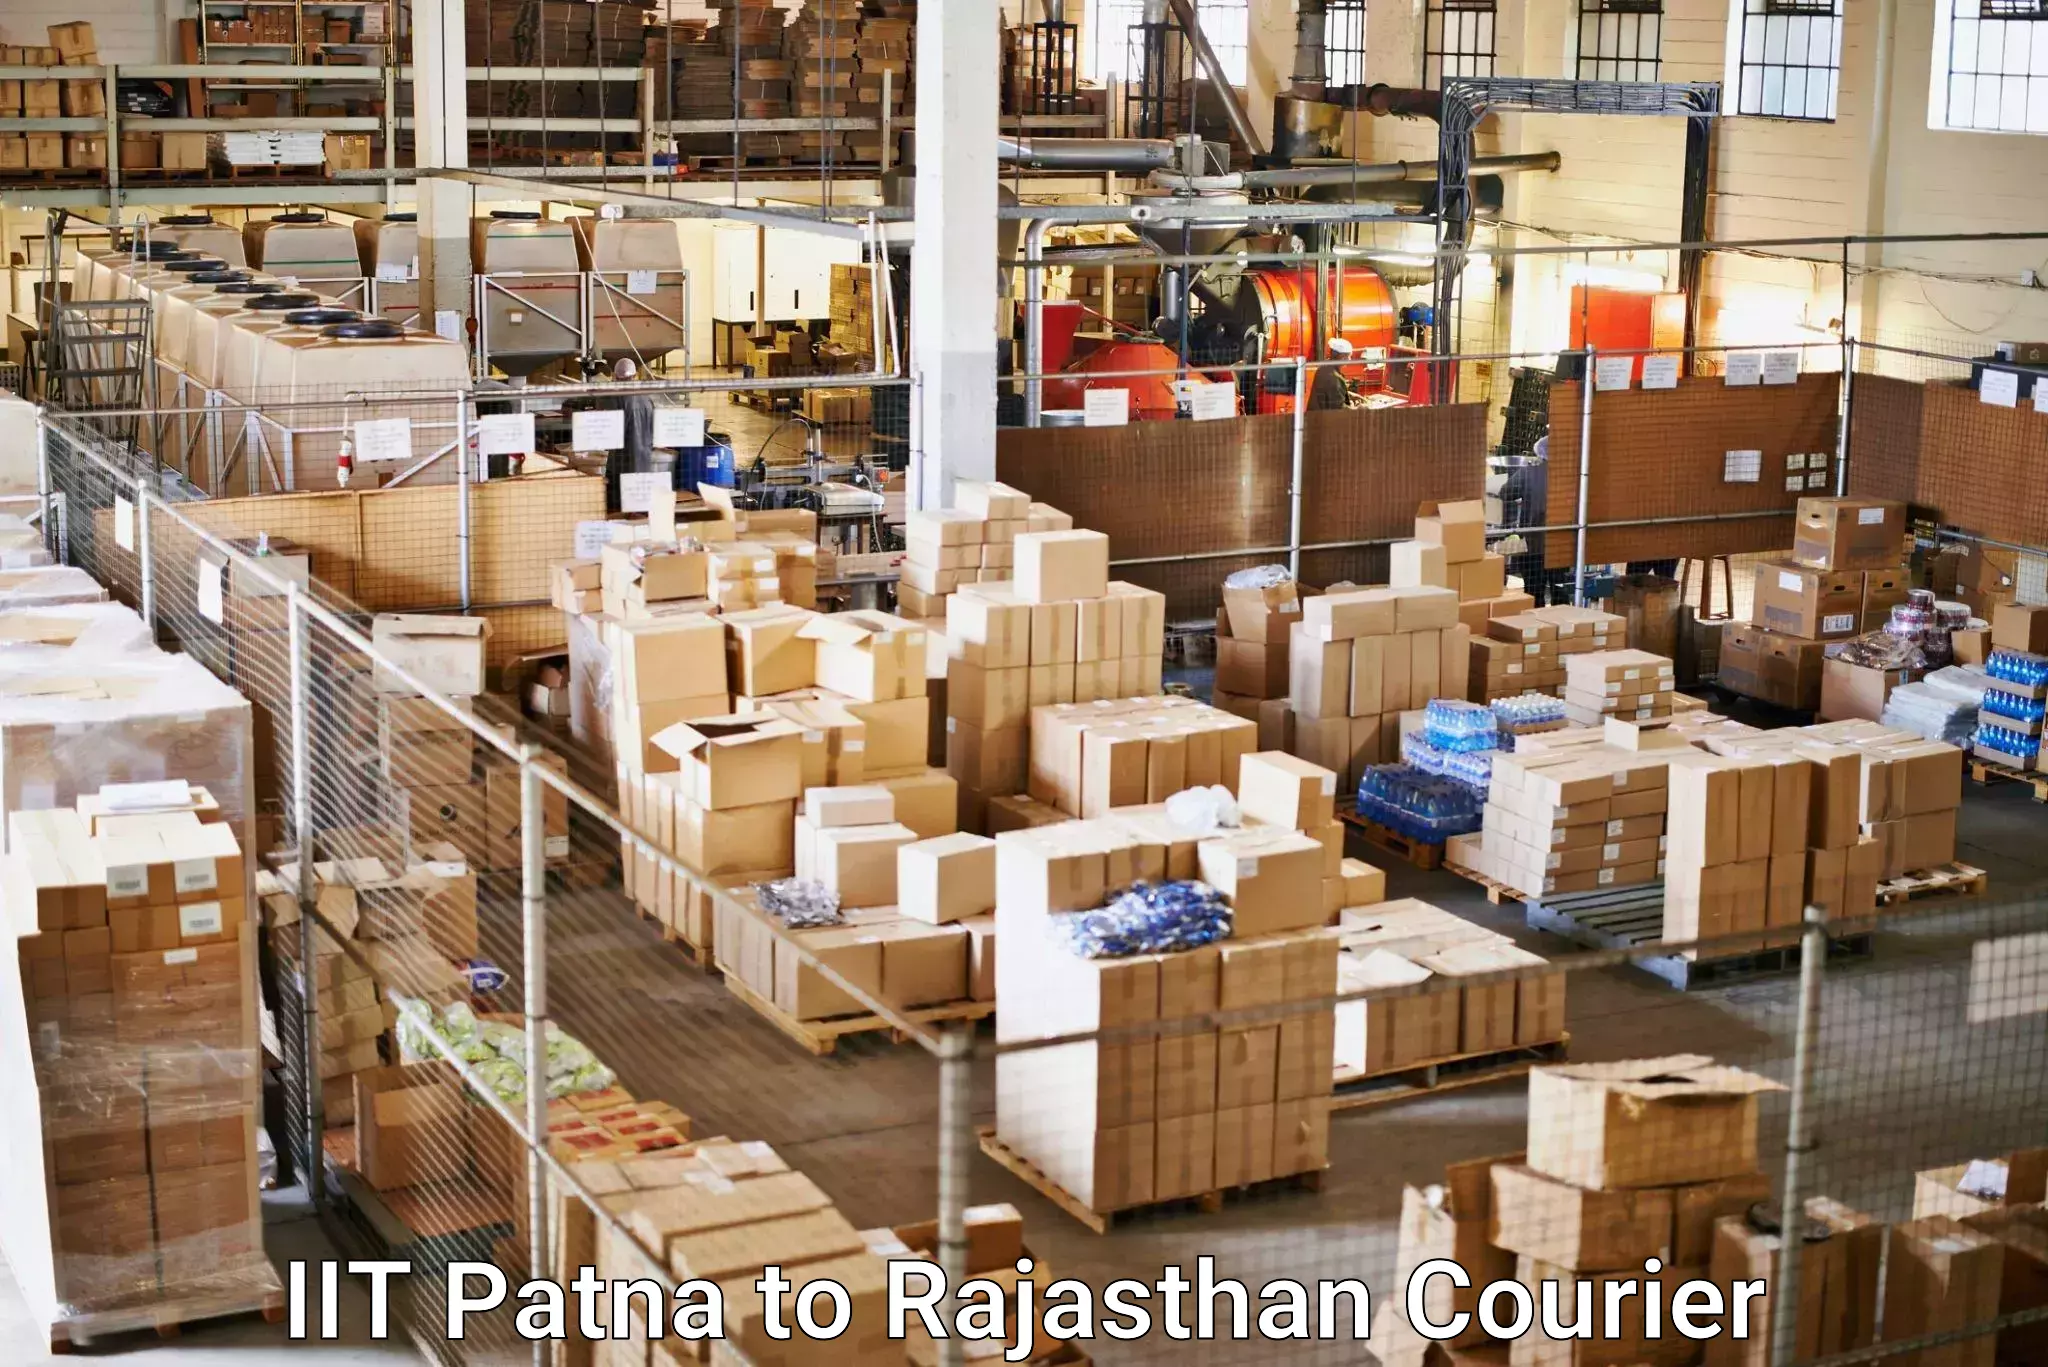 Courier service innovation IIT Patna to Parbatsar